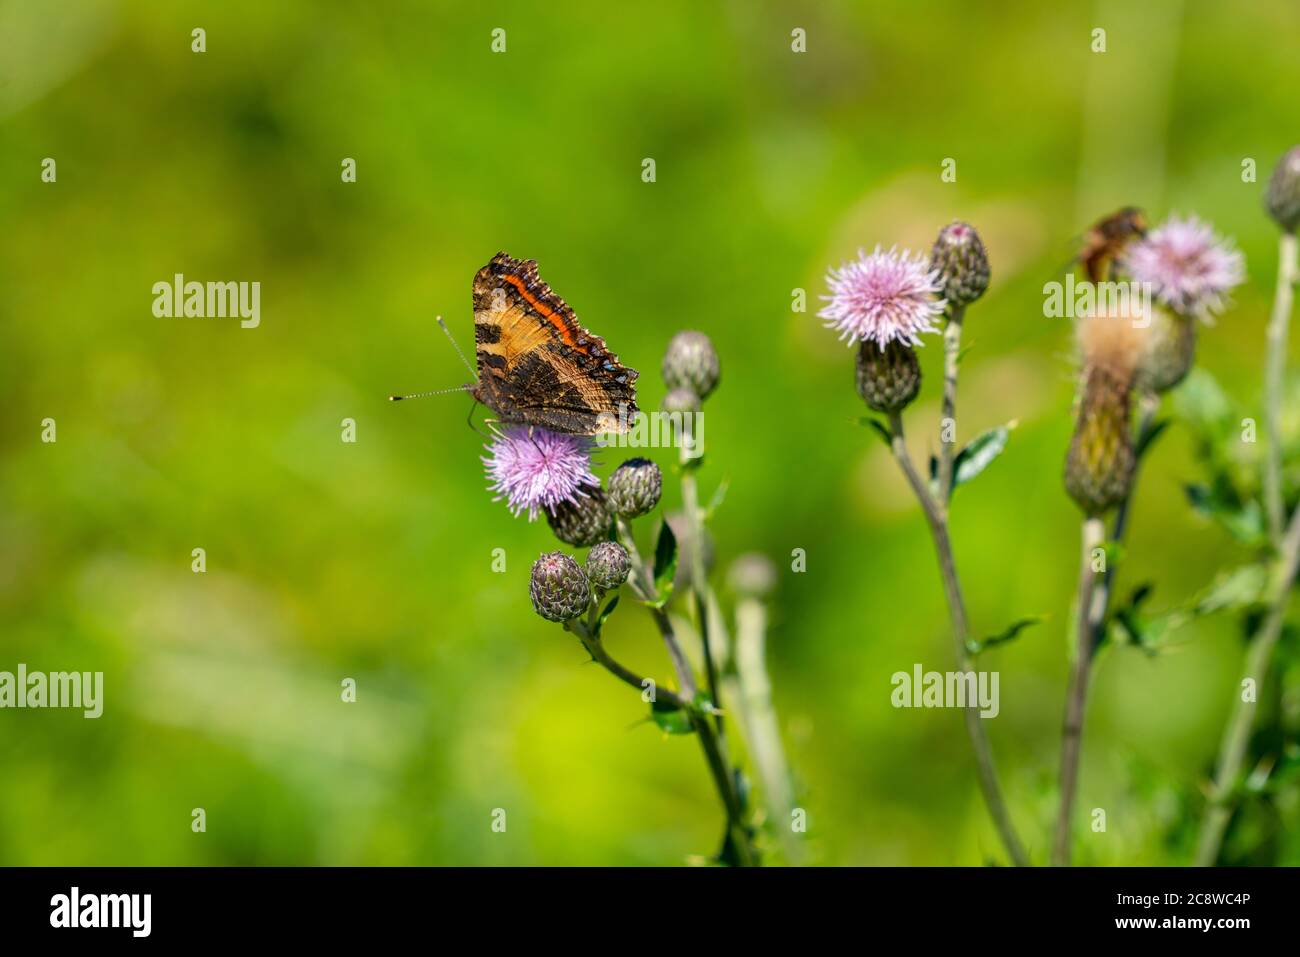 Mariposa, mariposa de pavo real, Aglais io, sobre una planta, cardo común, Foto de stock